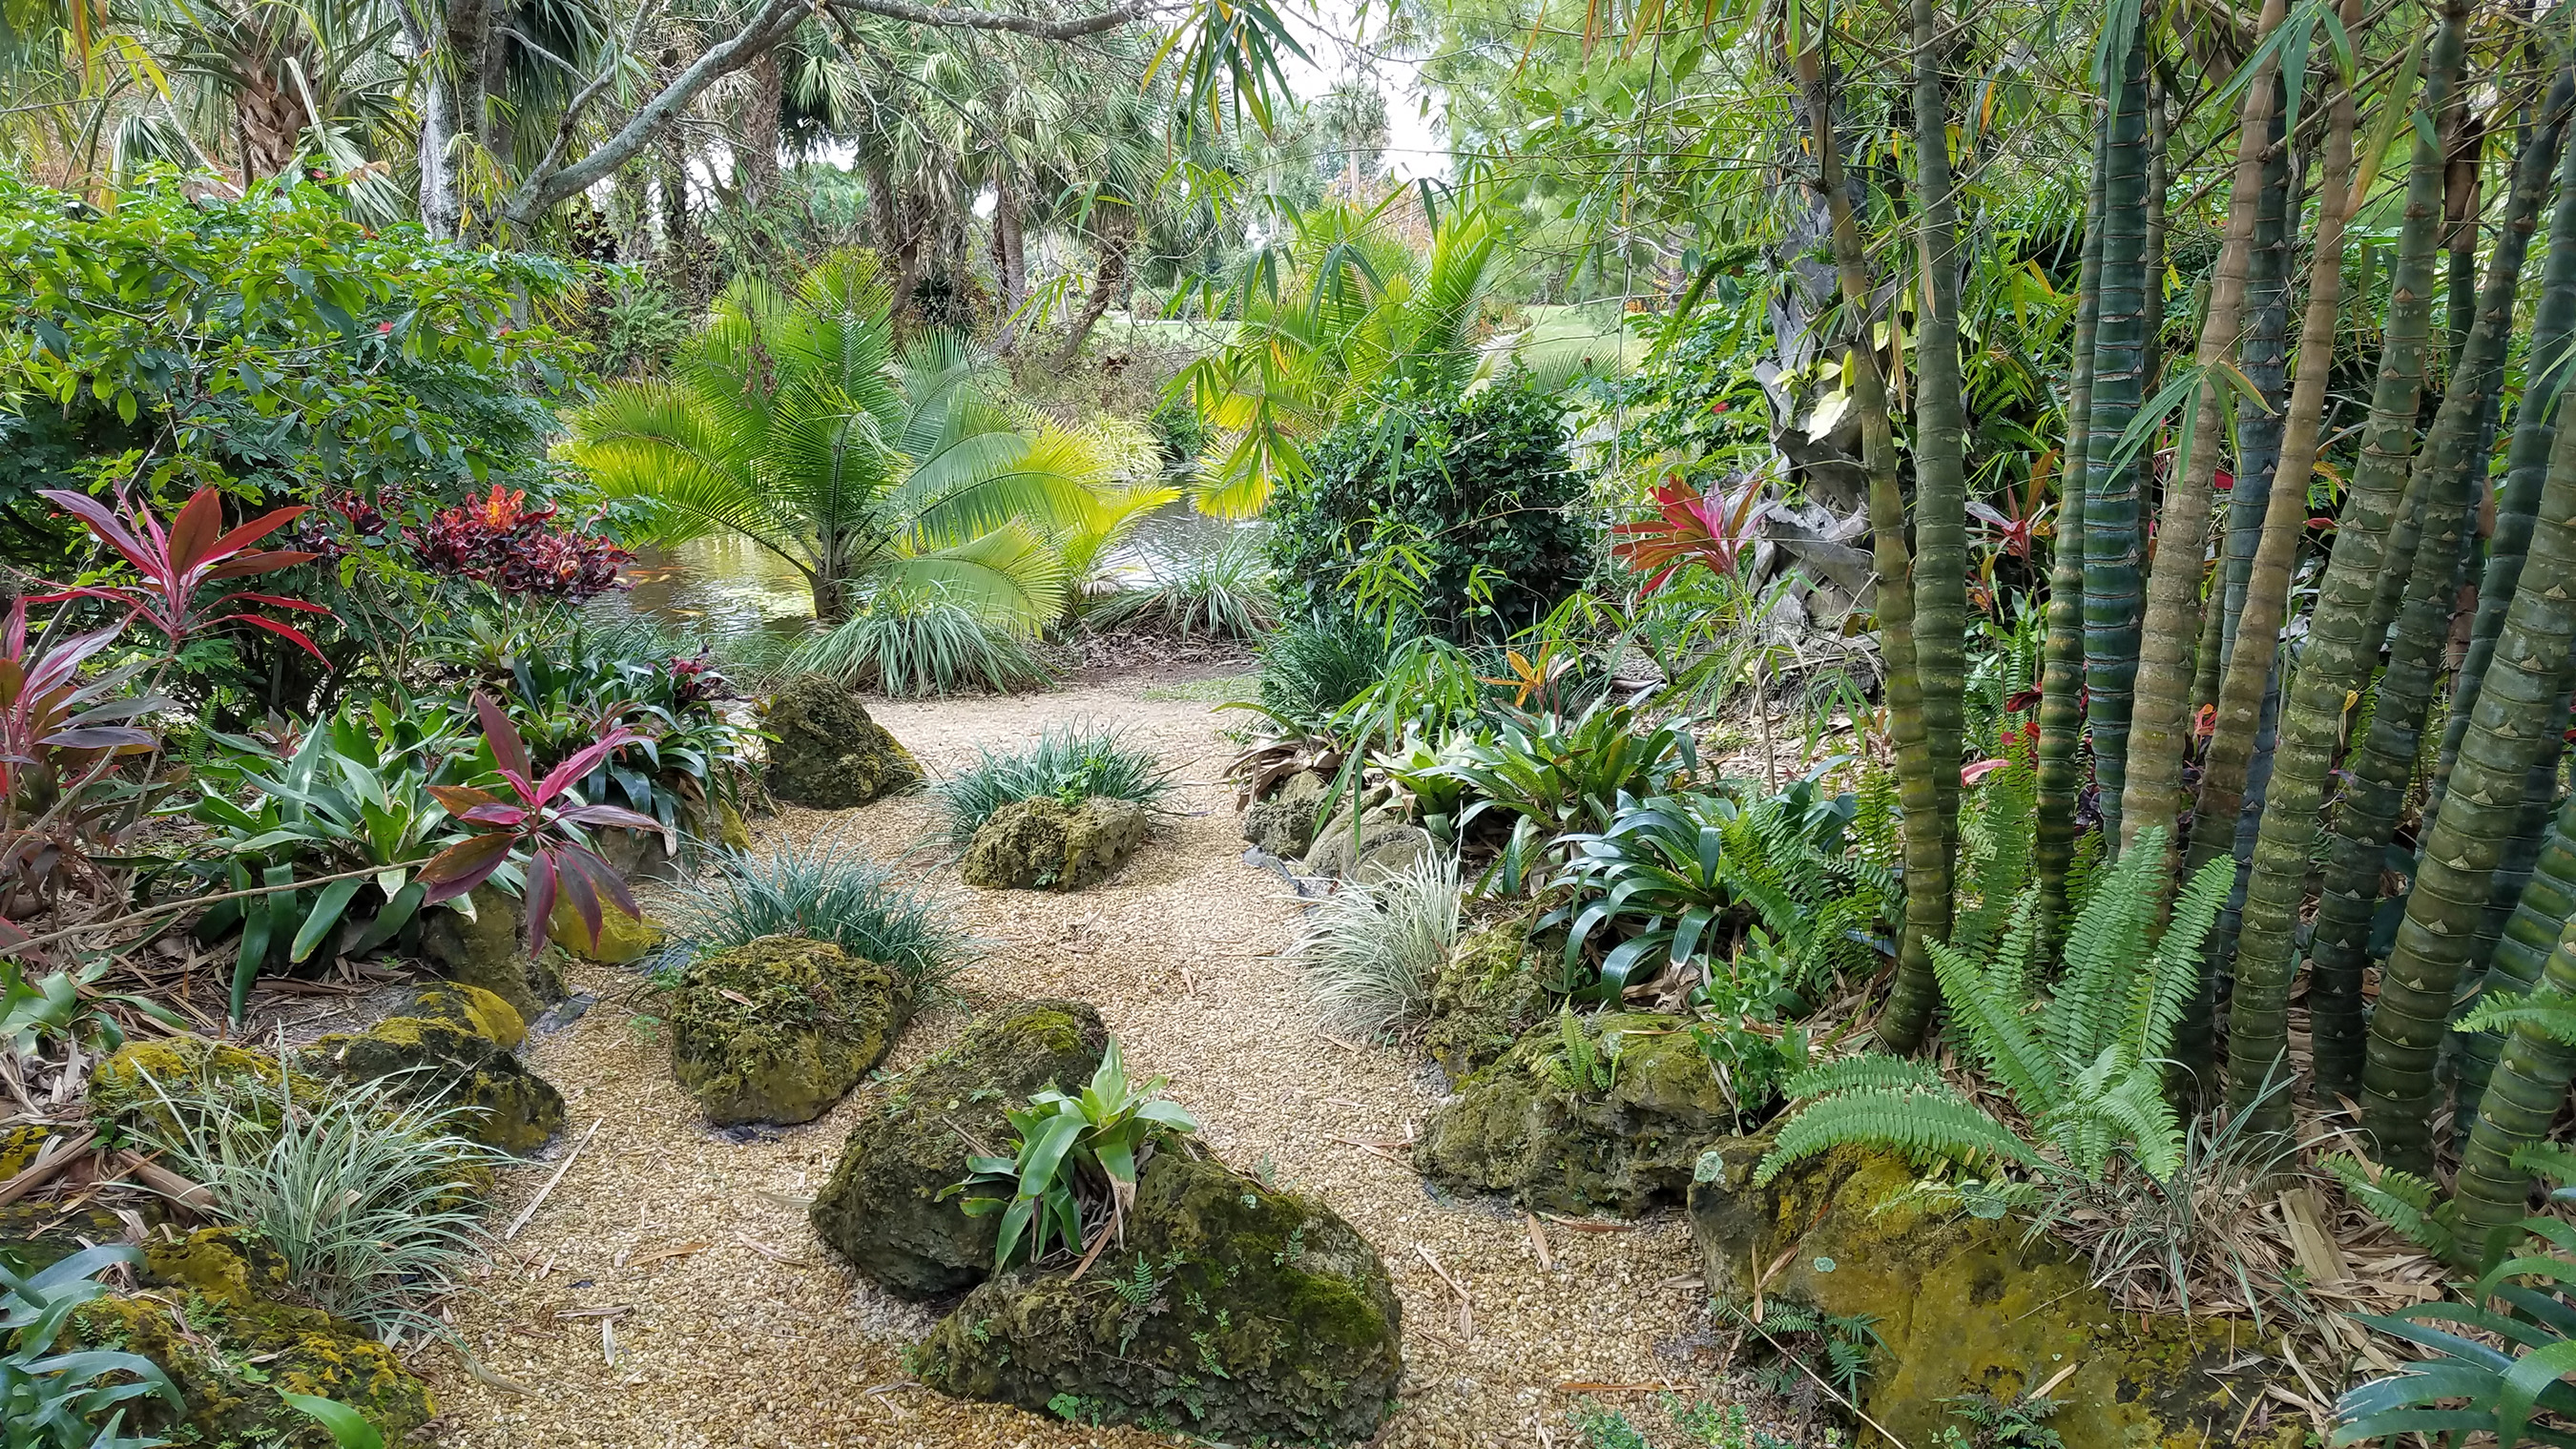 Fotowalk Mounts Botanical Garden Of Palm Beach County